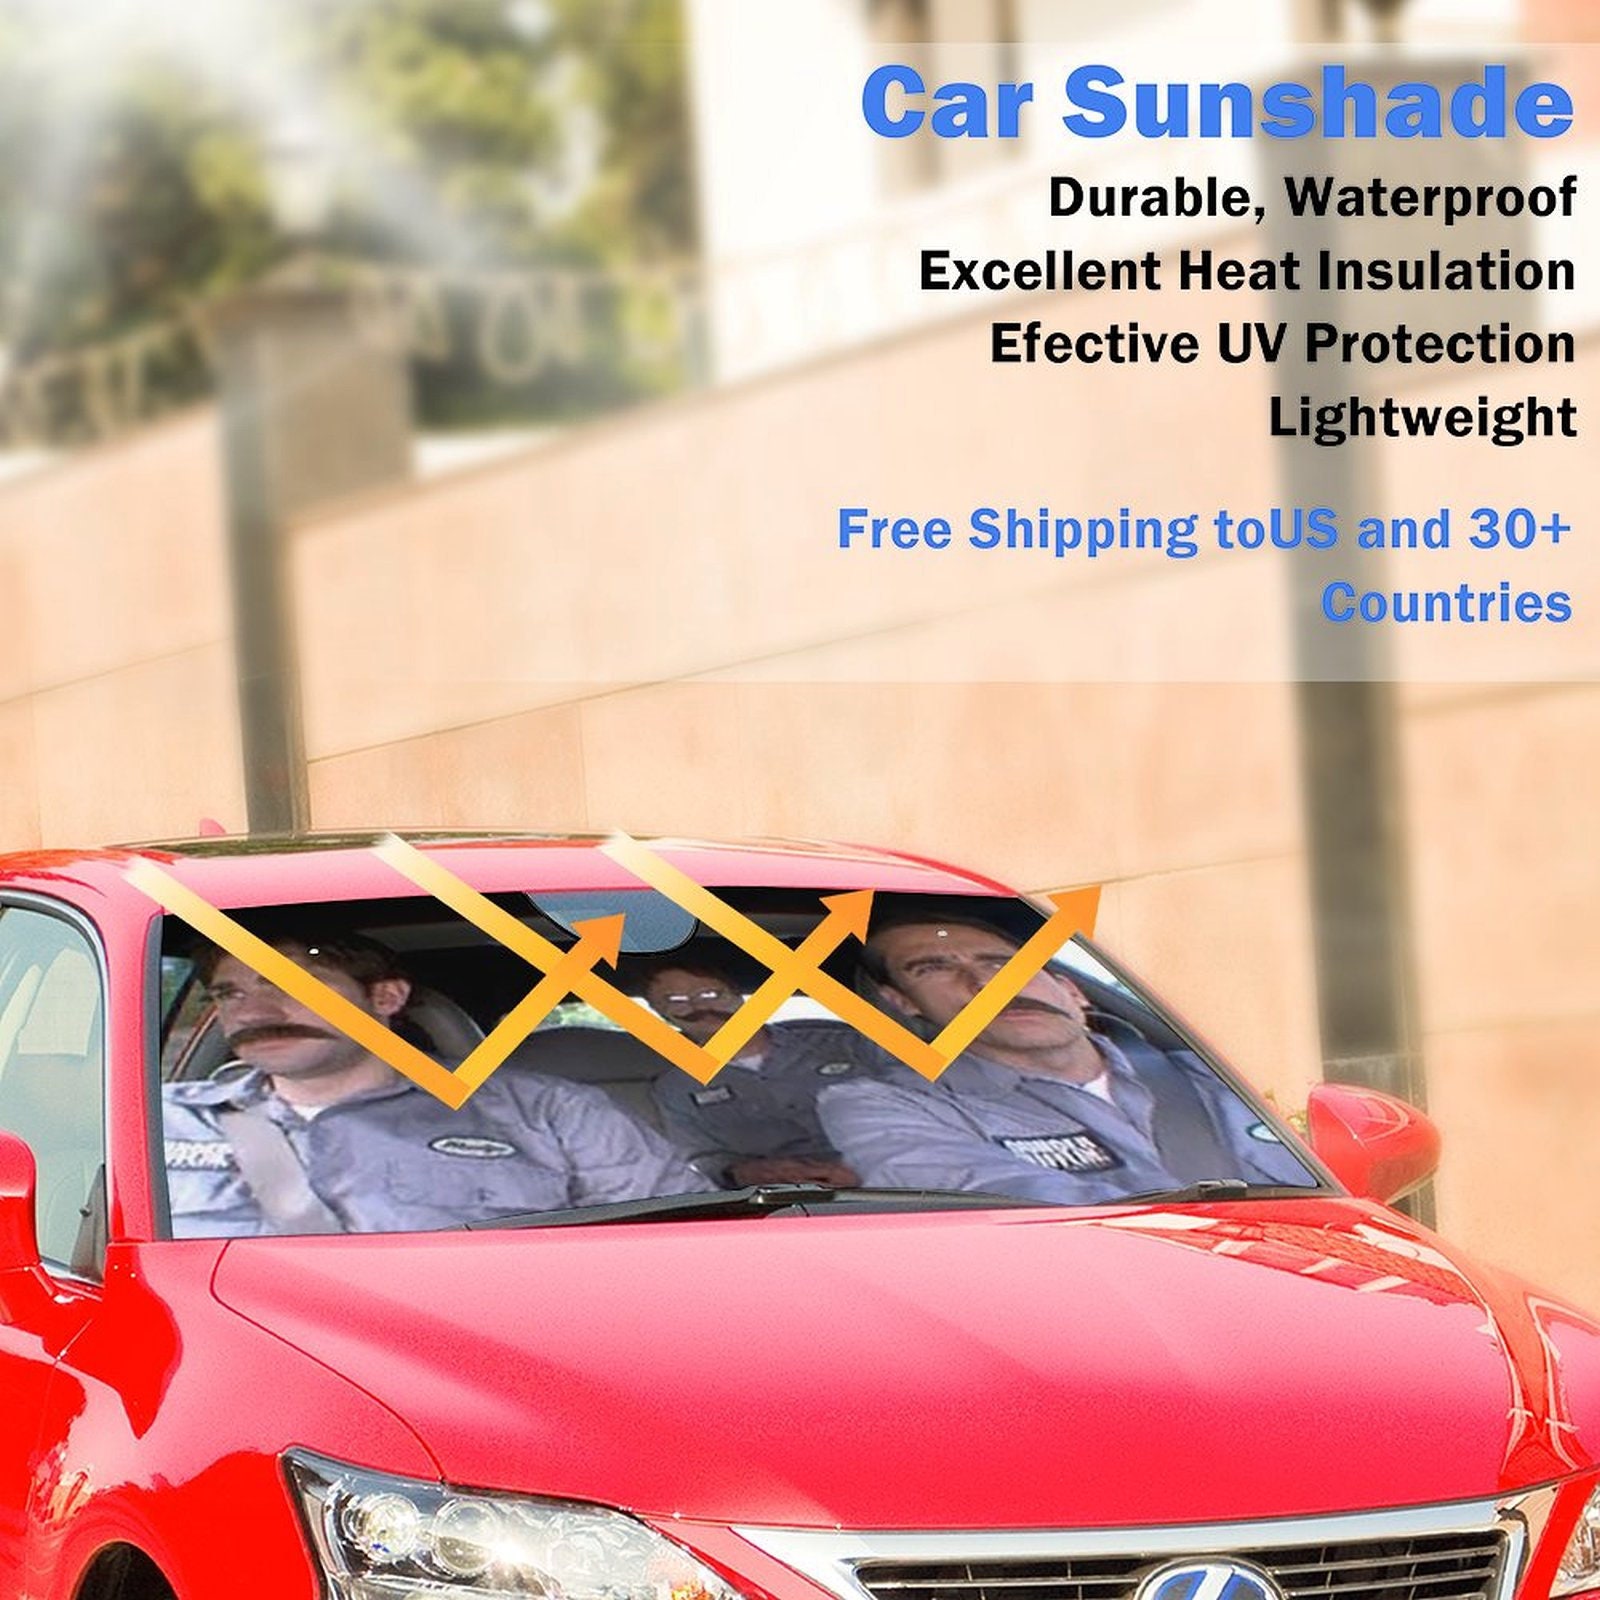 Discover Office Scene Movie Car Sunshade| Michael Scott Dw Schrute Car Sunshade